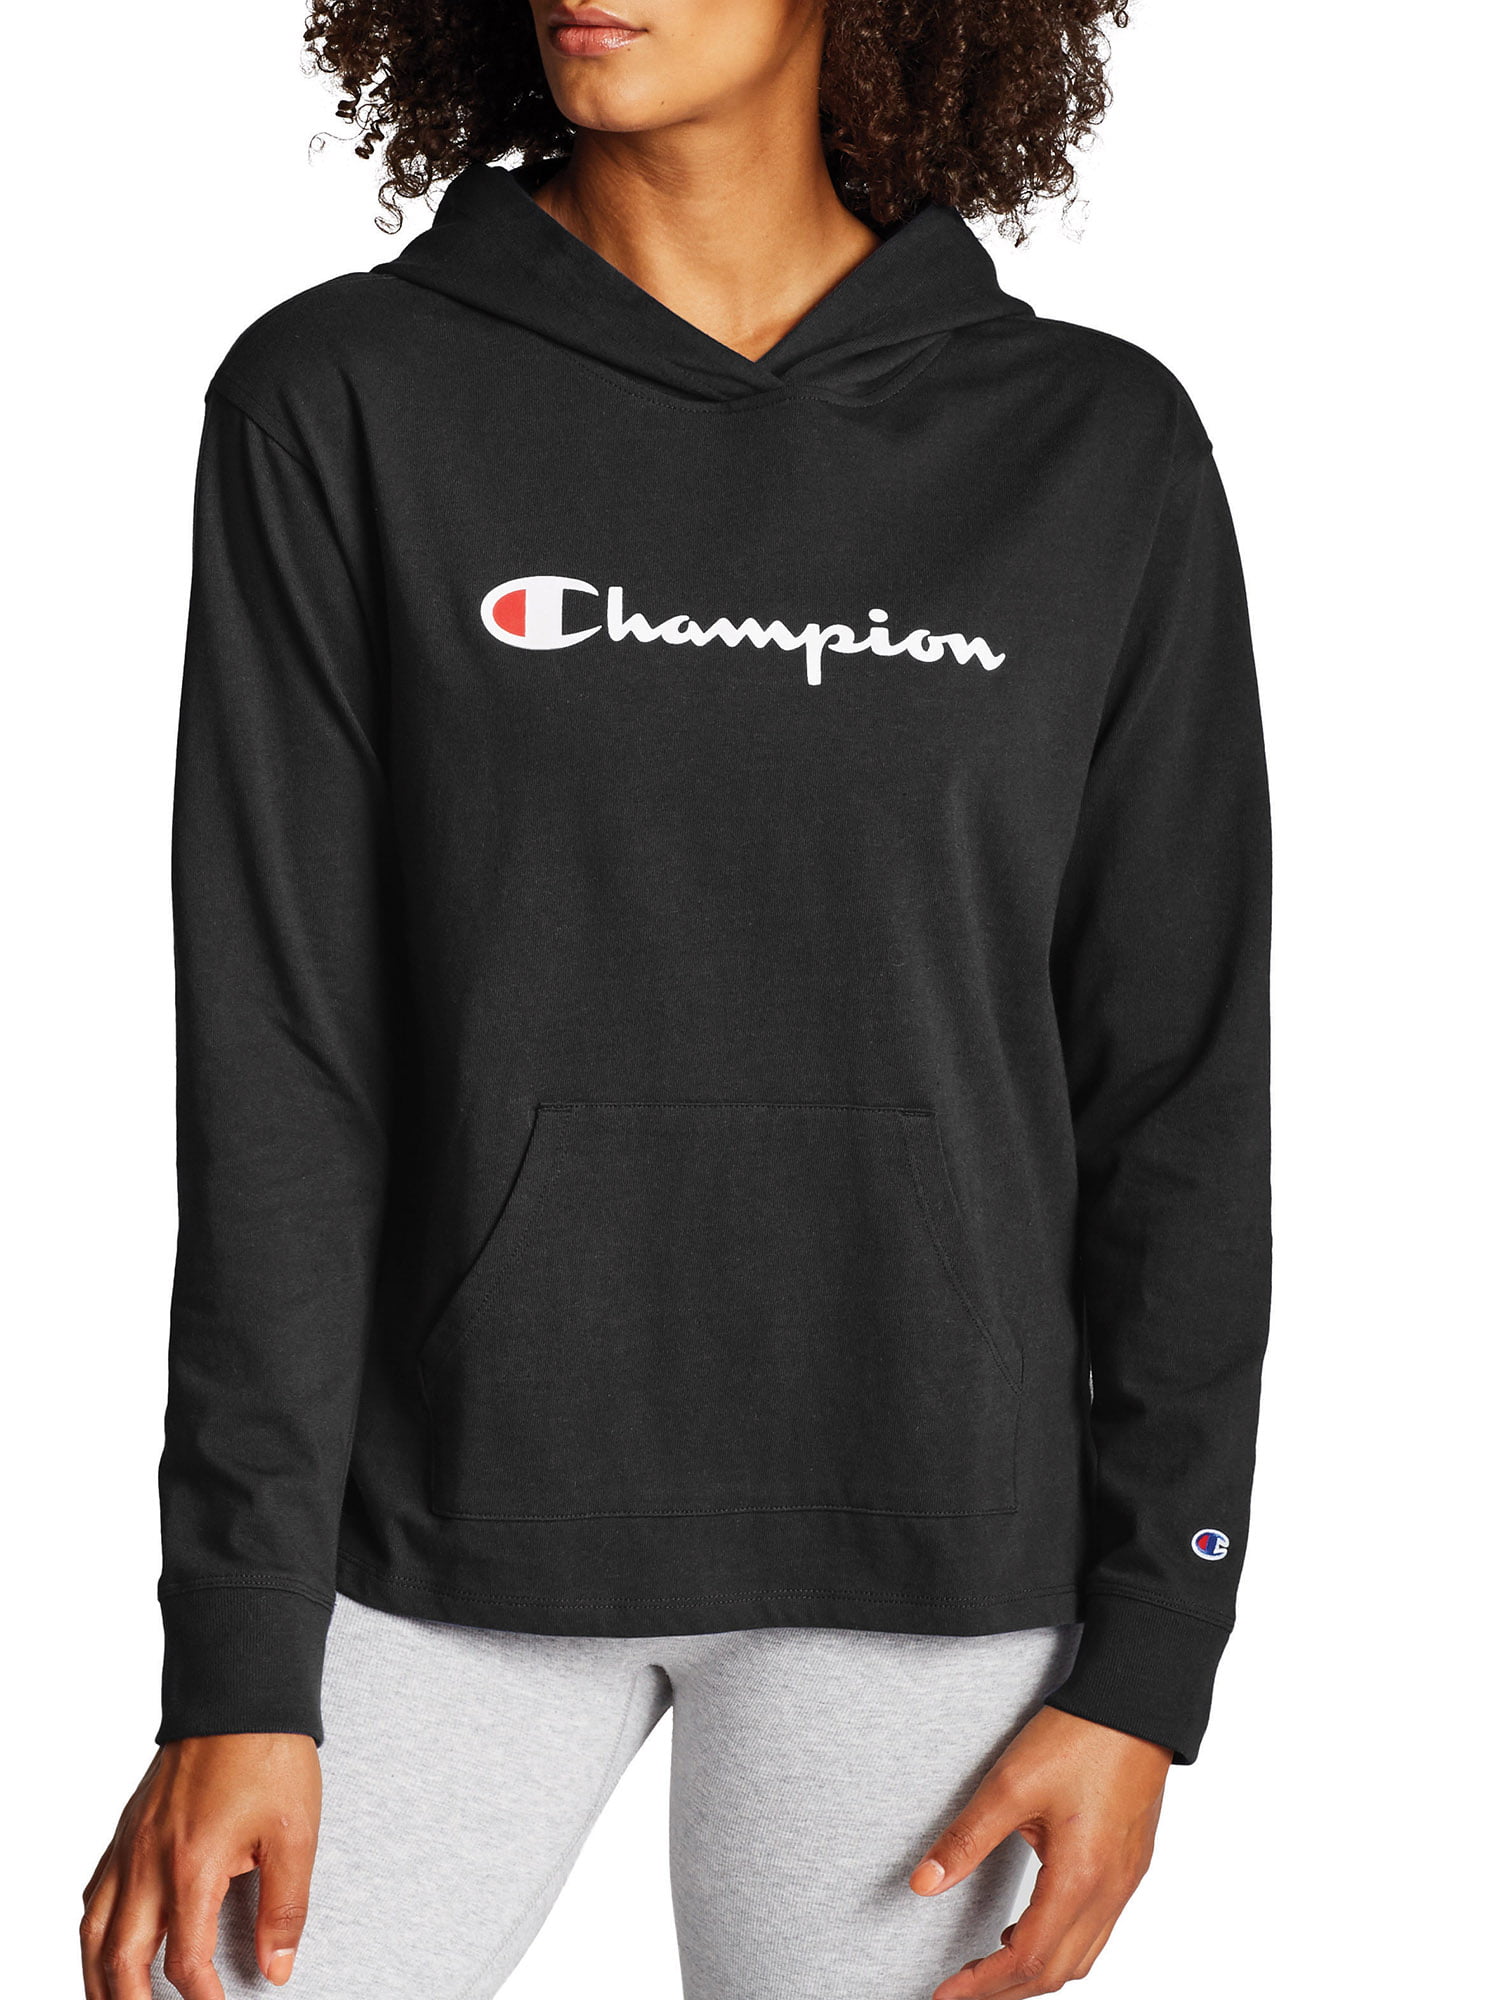 champion hoodies at walmart